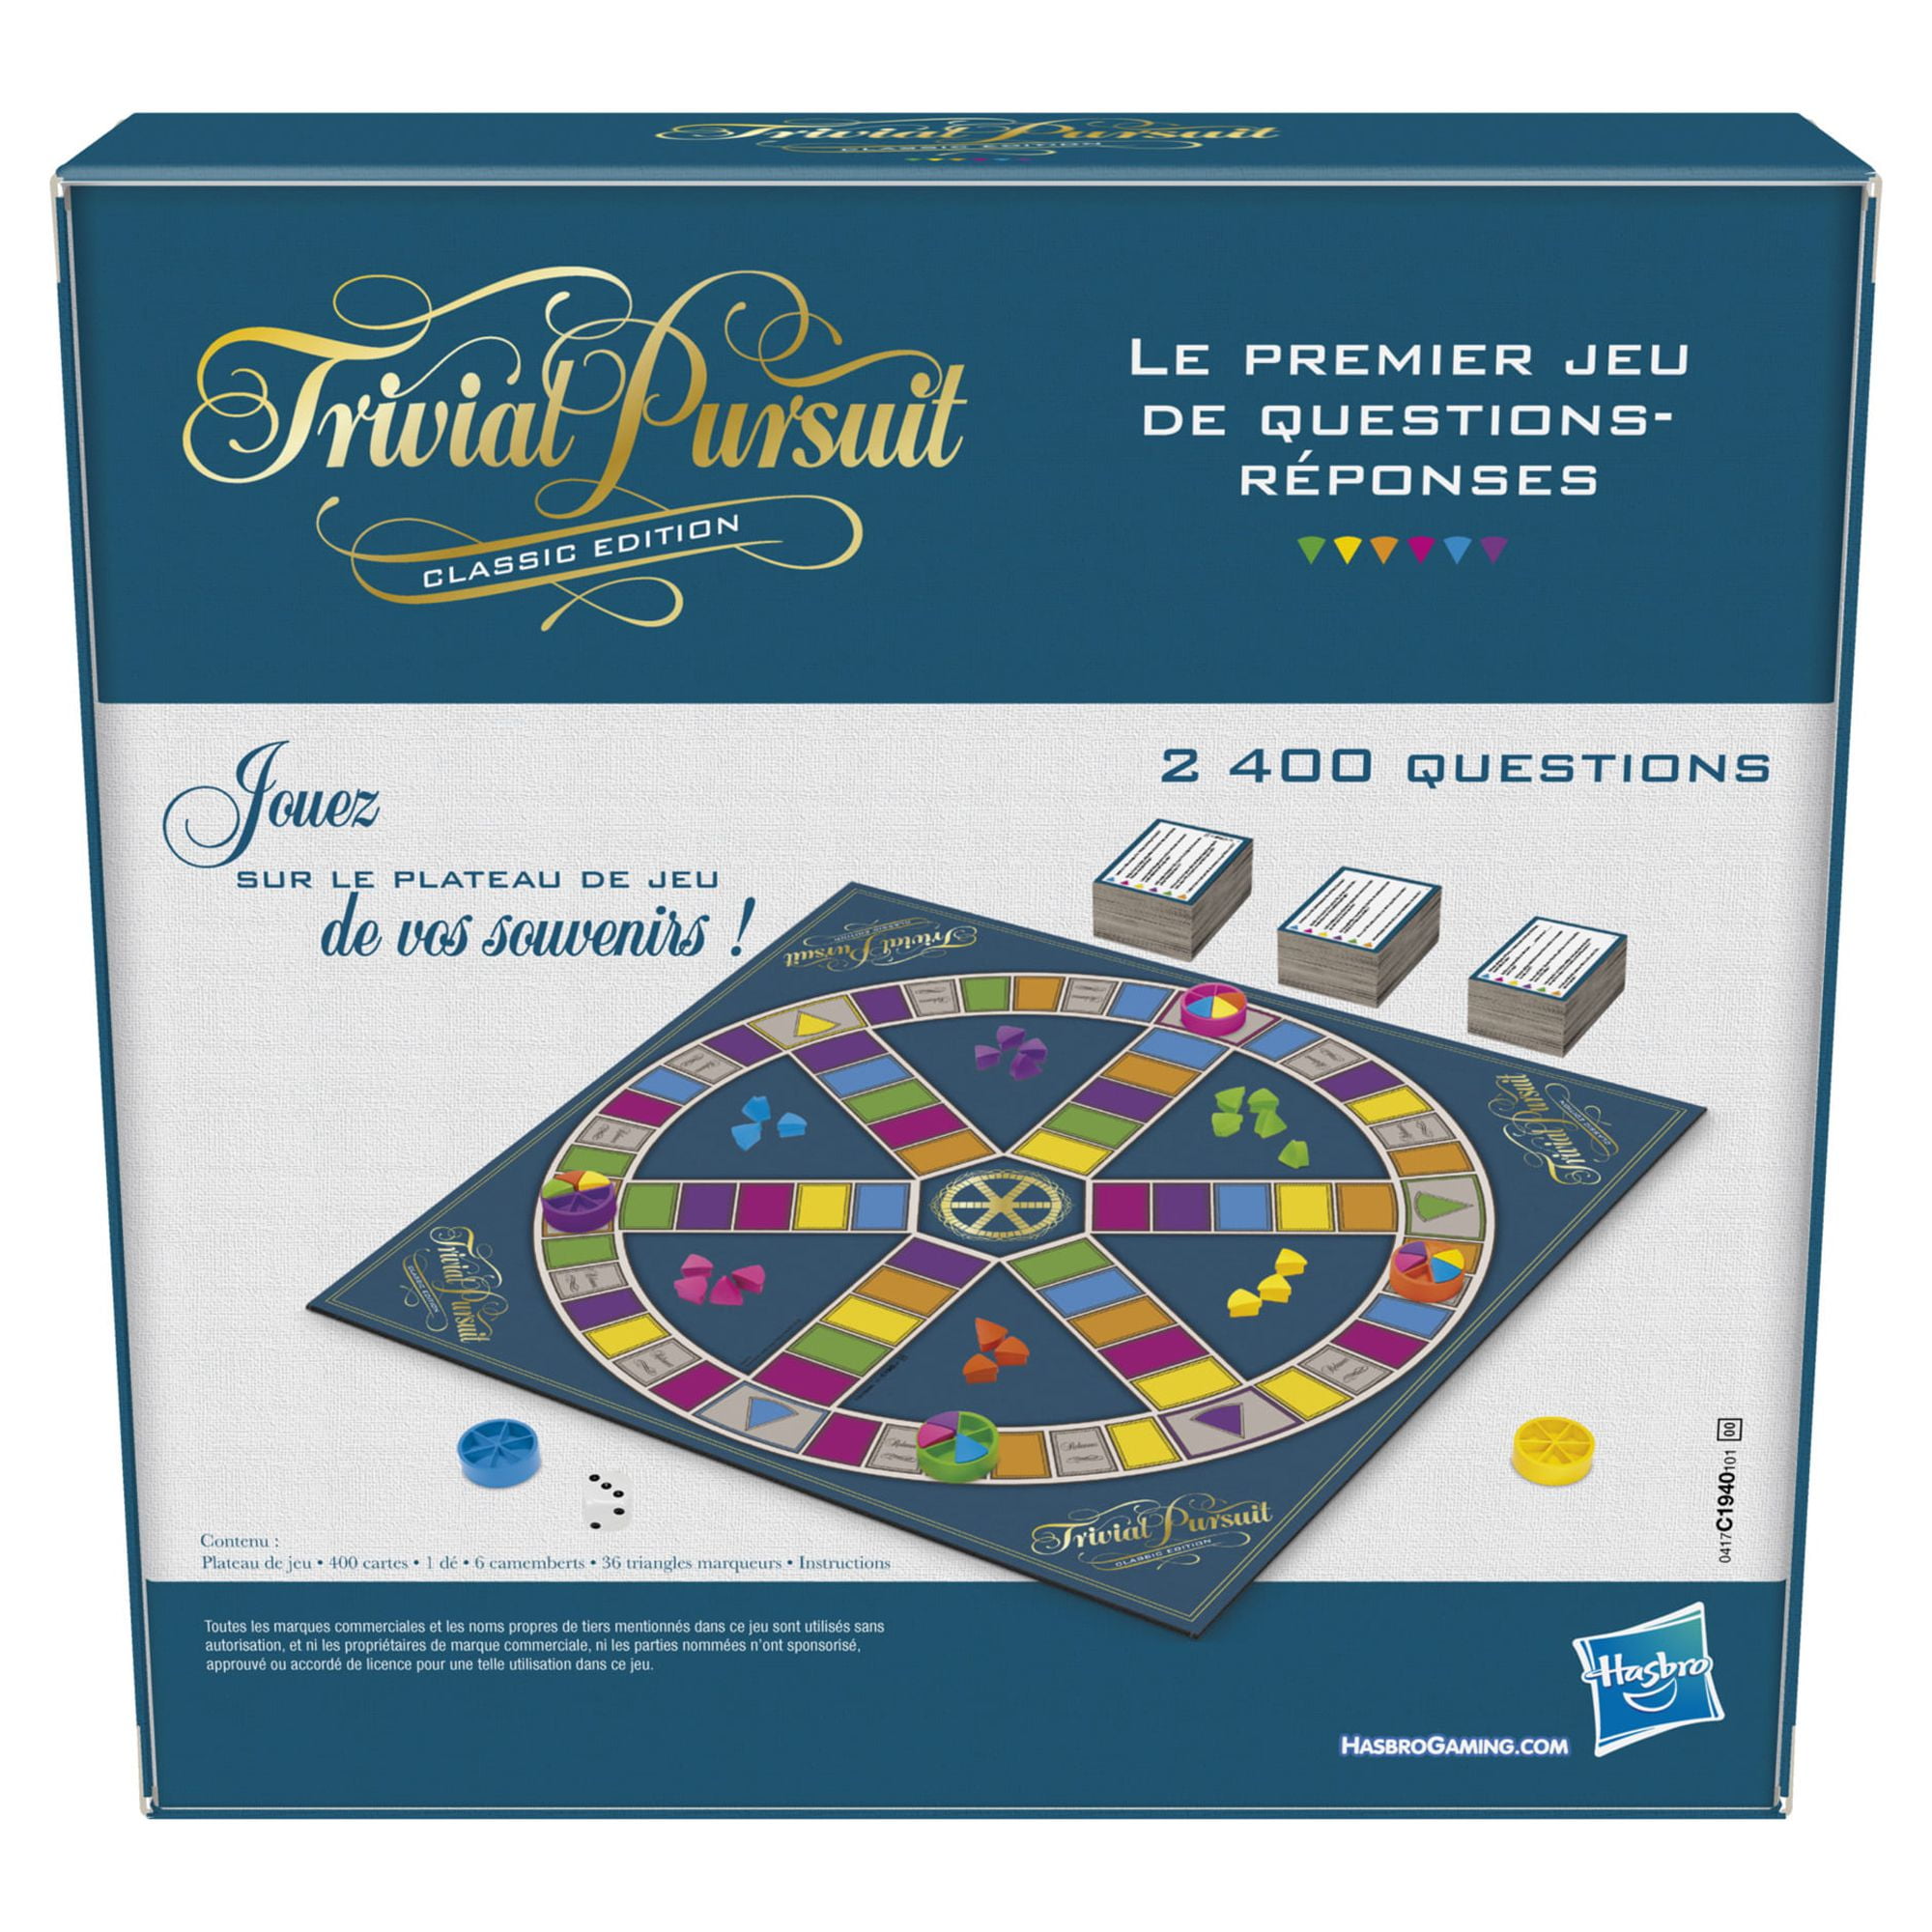 Trivial Pursuit 2023 Calendar: 2000s Edition - Hasbro